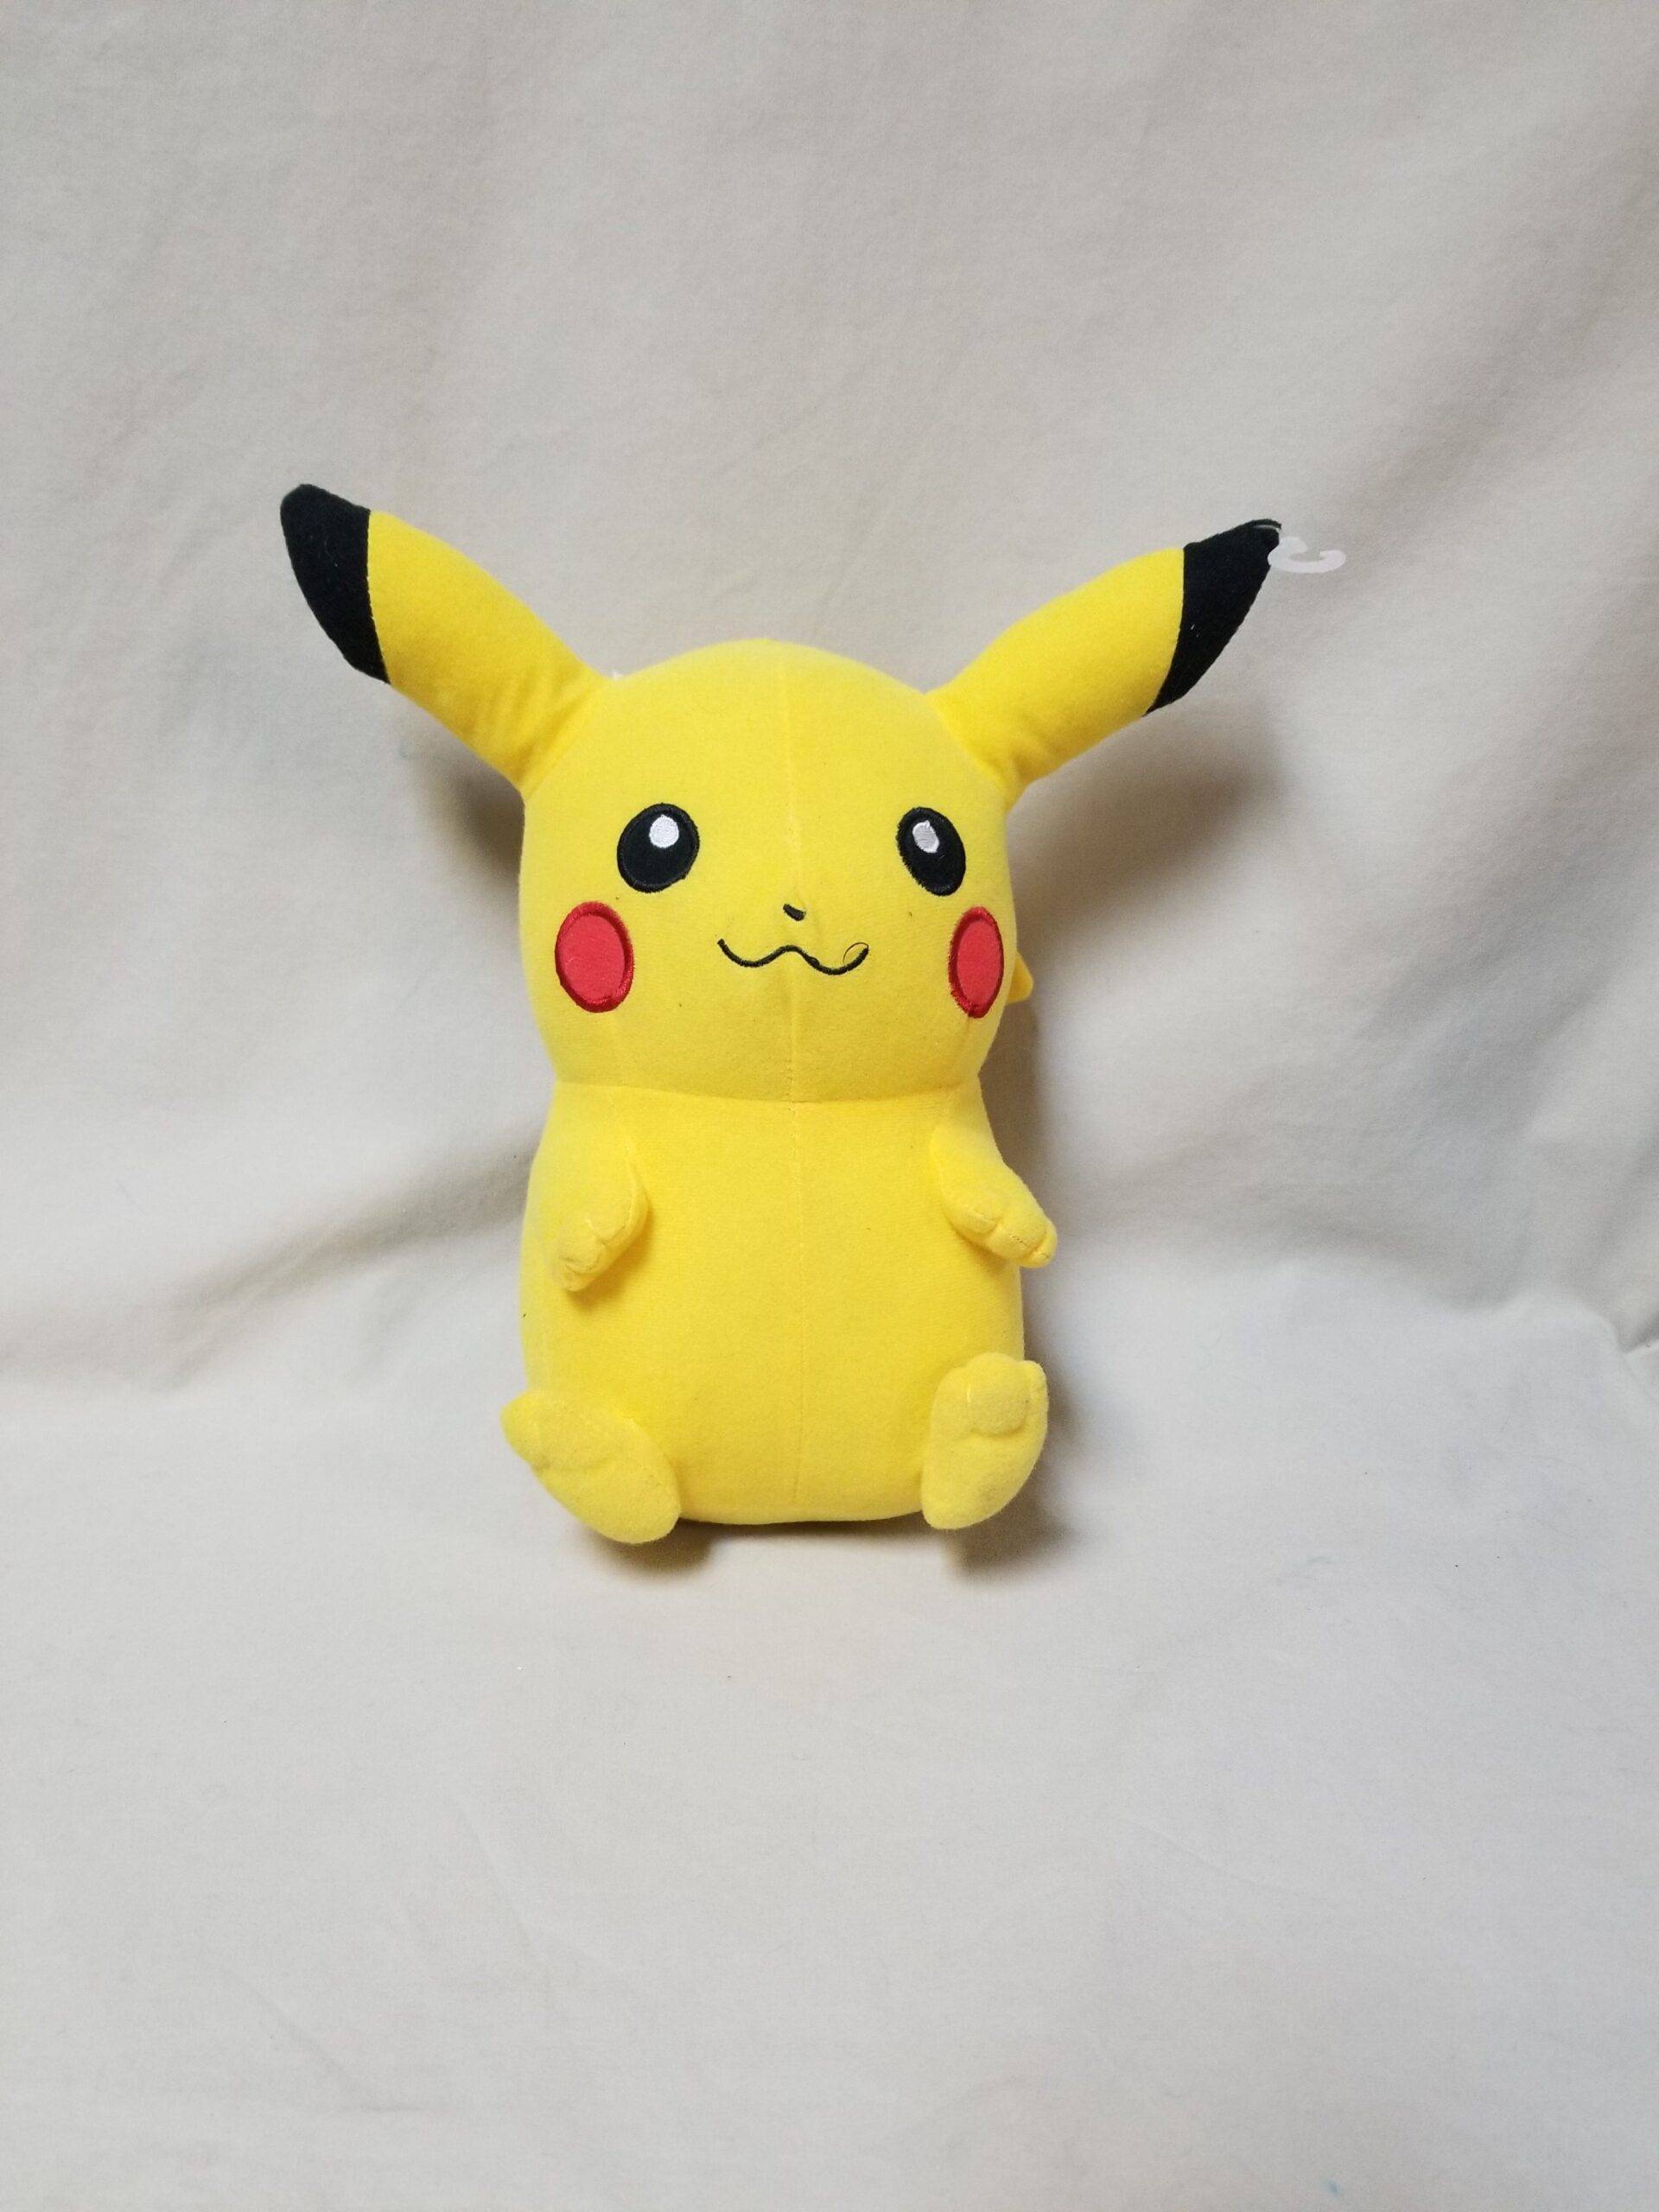 stuffed Pikachu toy